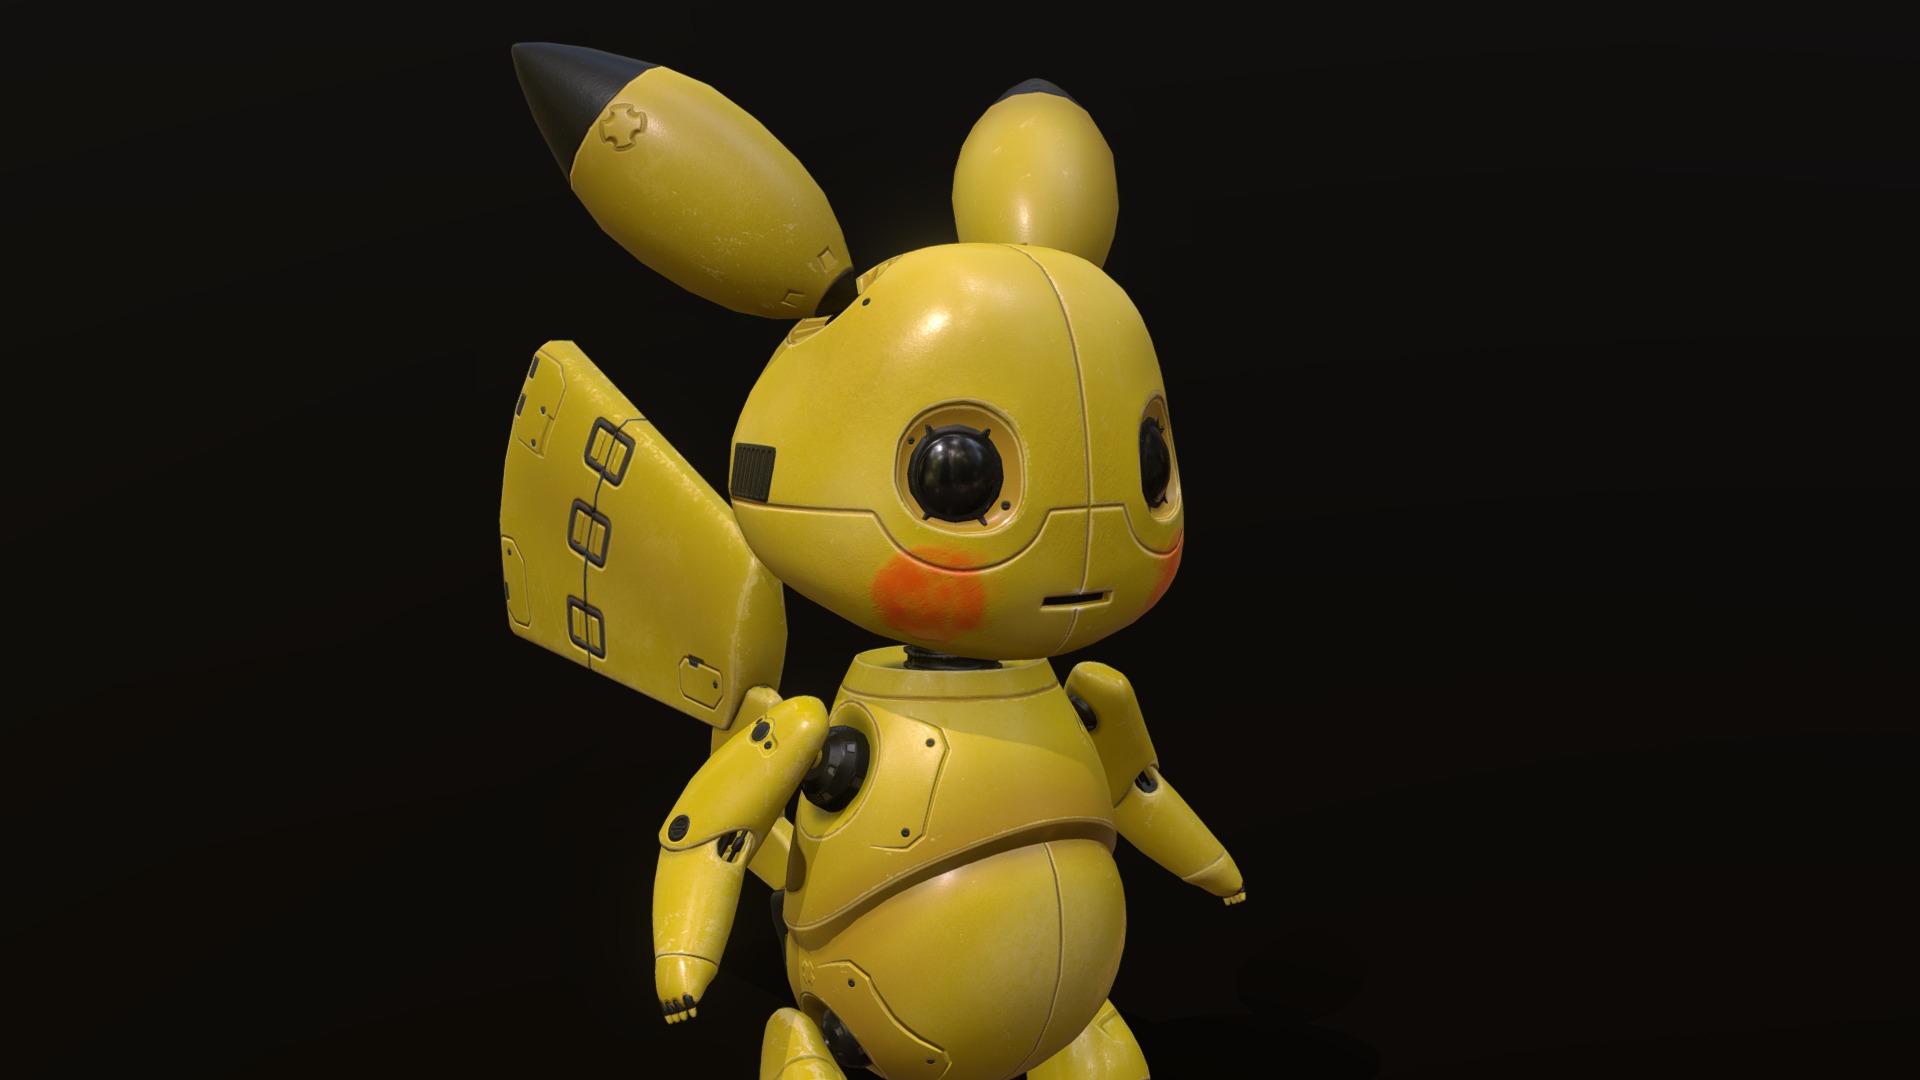 My take on the Jake’s Parker Pikachu design. Had a lot of fun making it. More renders on artstation https://www.artstation.com/artwork/JlD6vn 

Model in Blender, UV’s in Maya, Texturing in Substance Painter/Designer 3d model